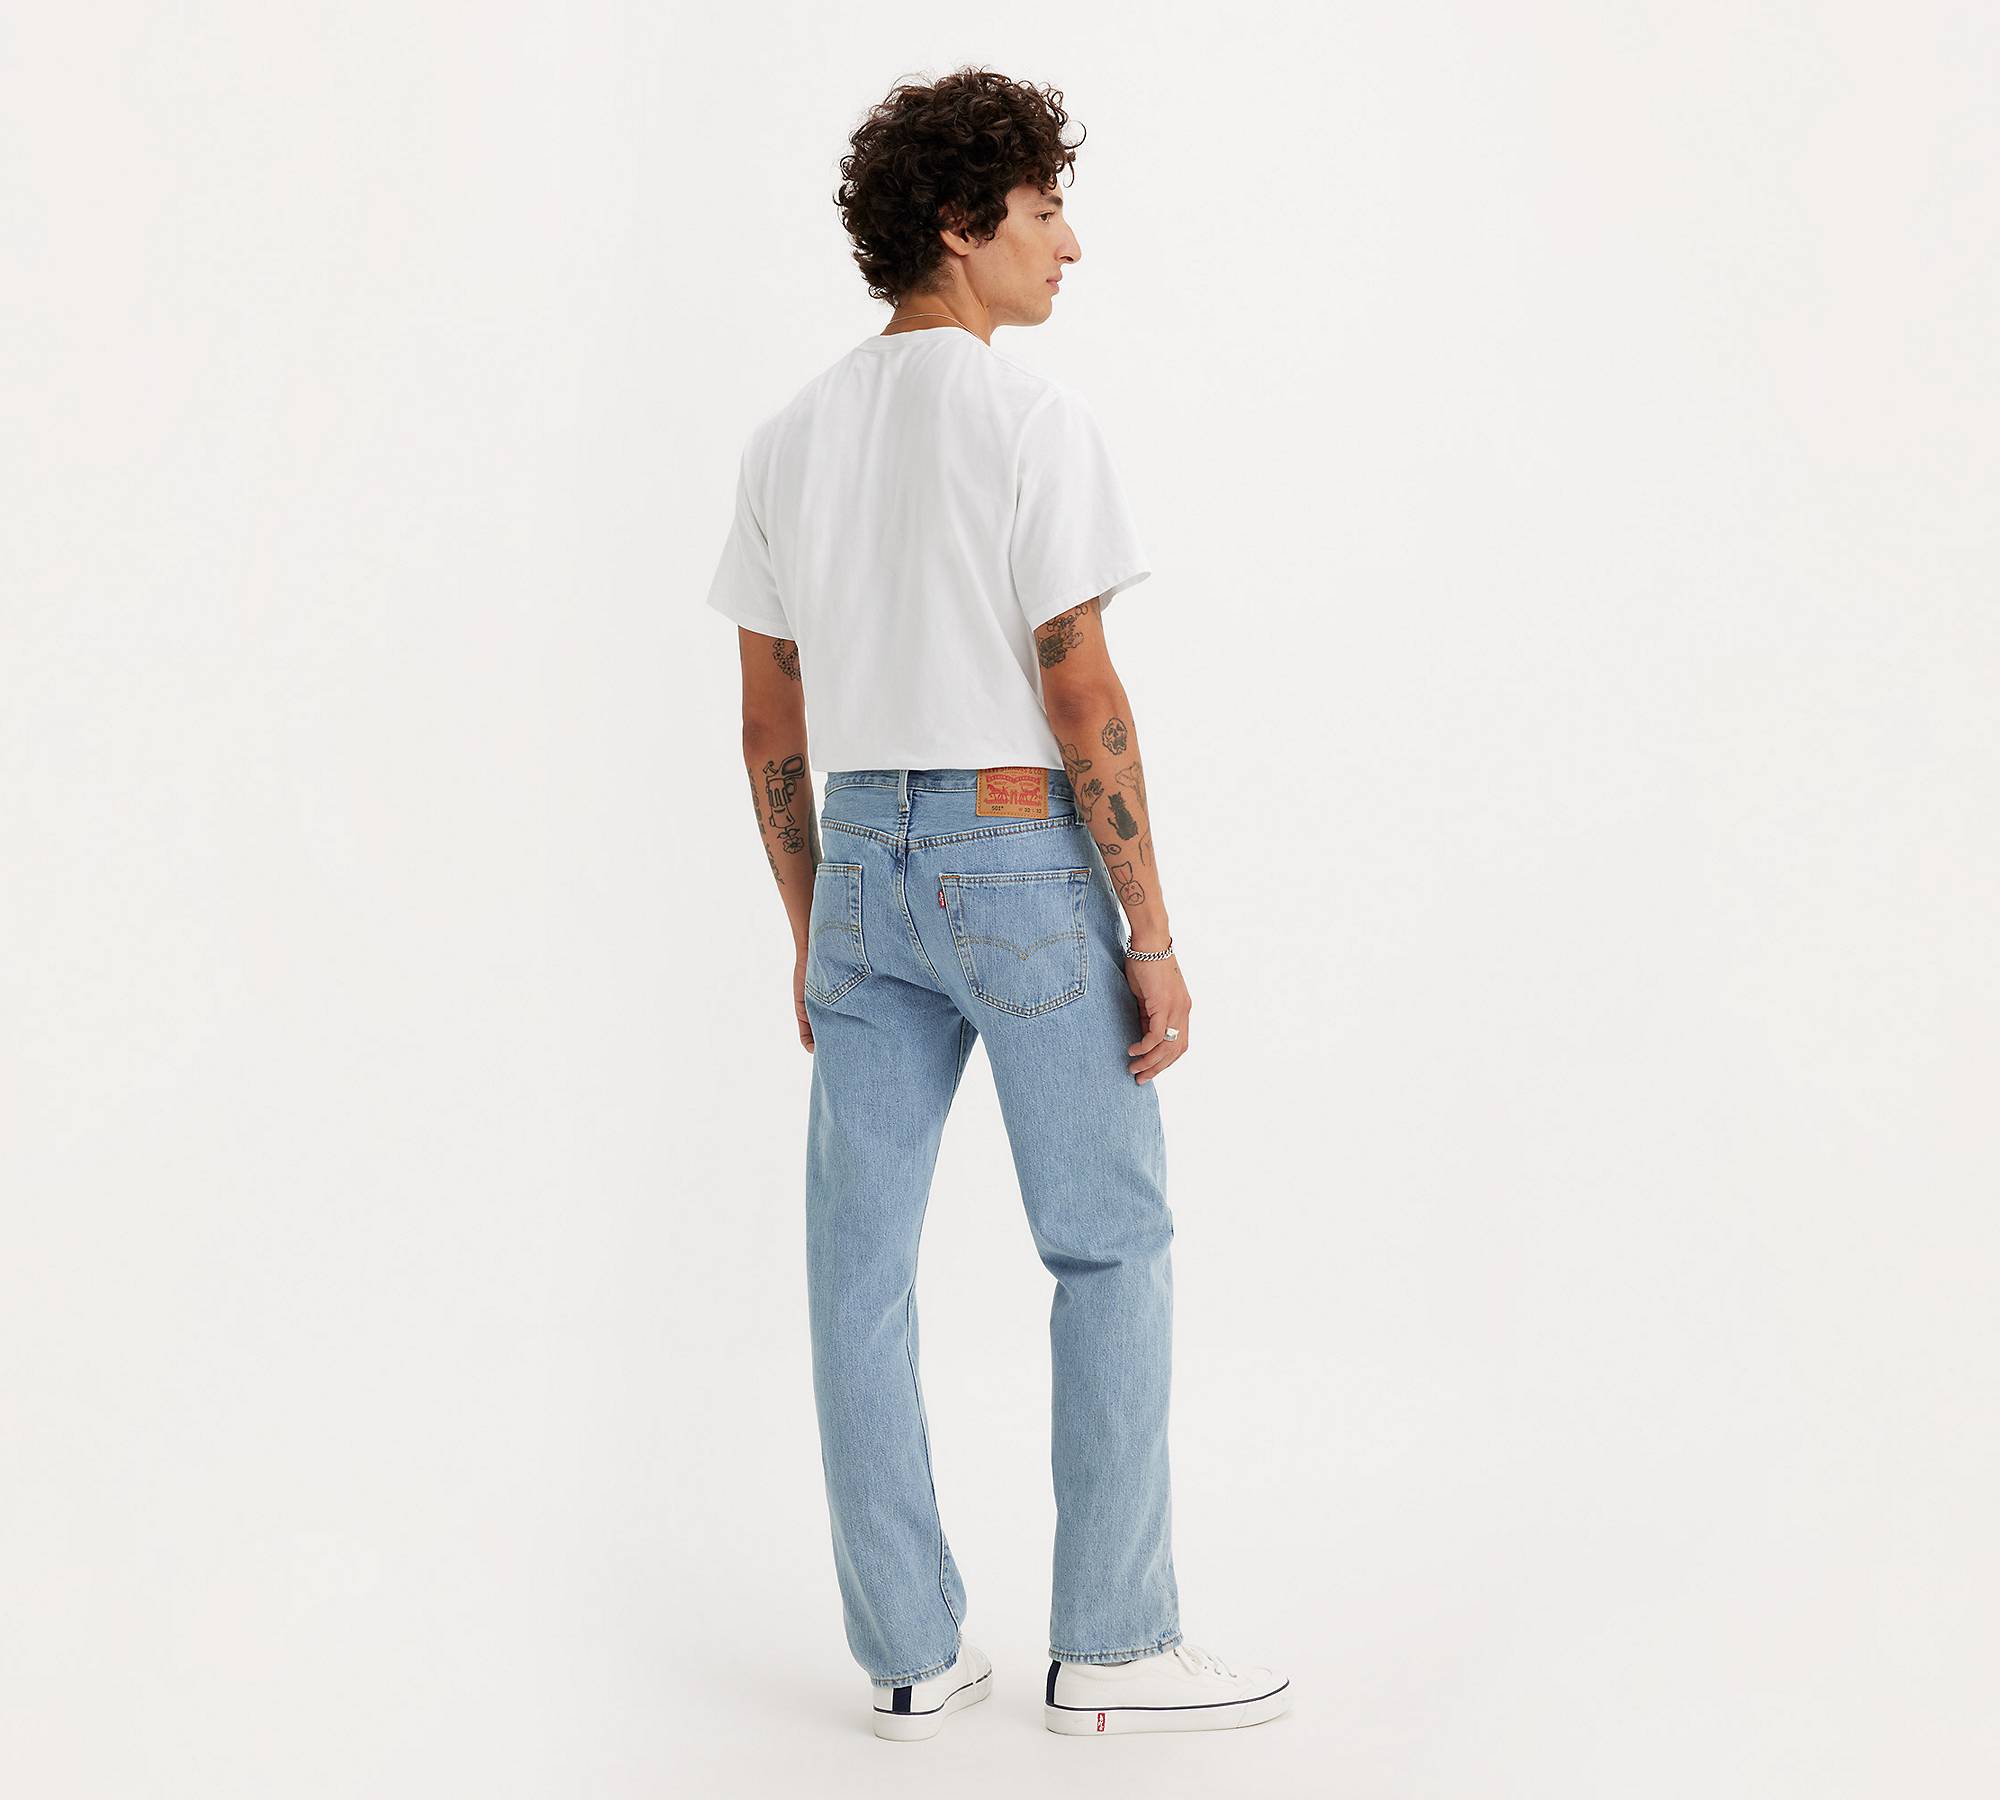 levi's 501 jeans original, Levis-501-Mens-Jeans-Levis-Gents-Strauss-Denim-Original-Fit-Straight